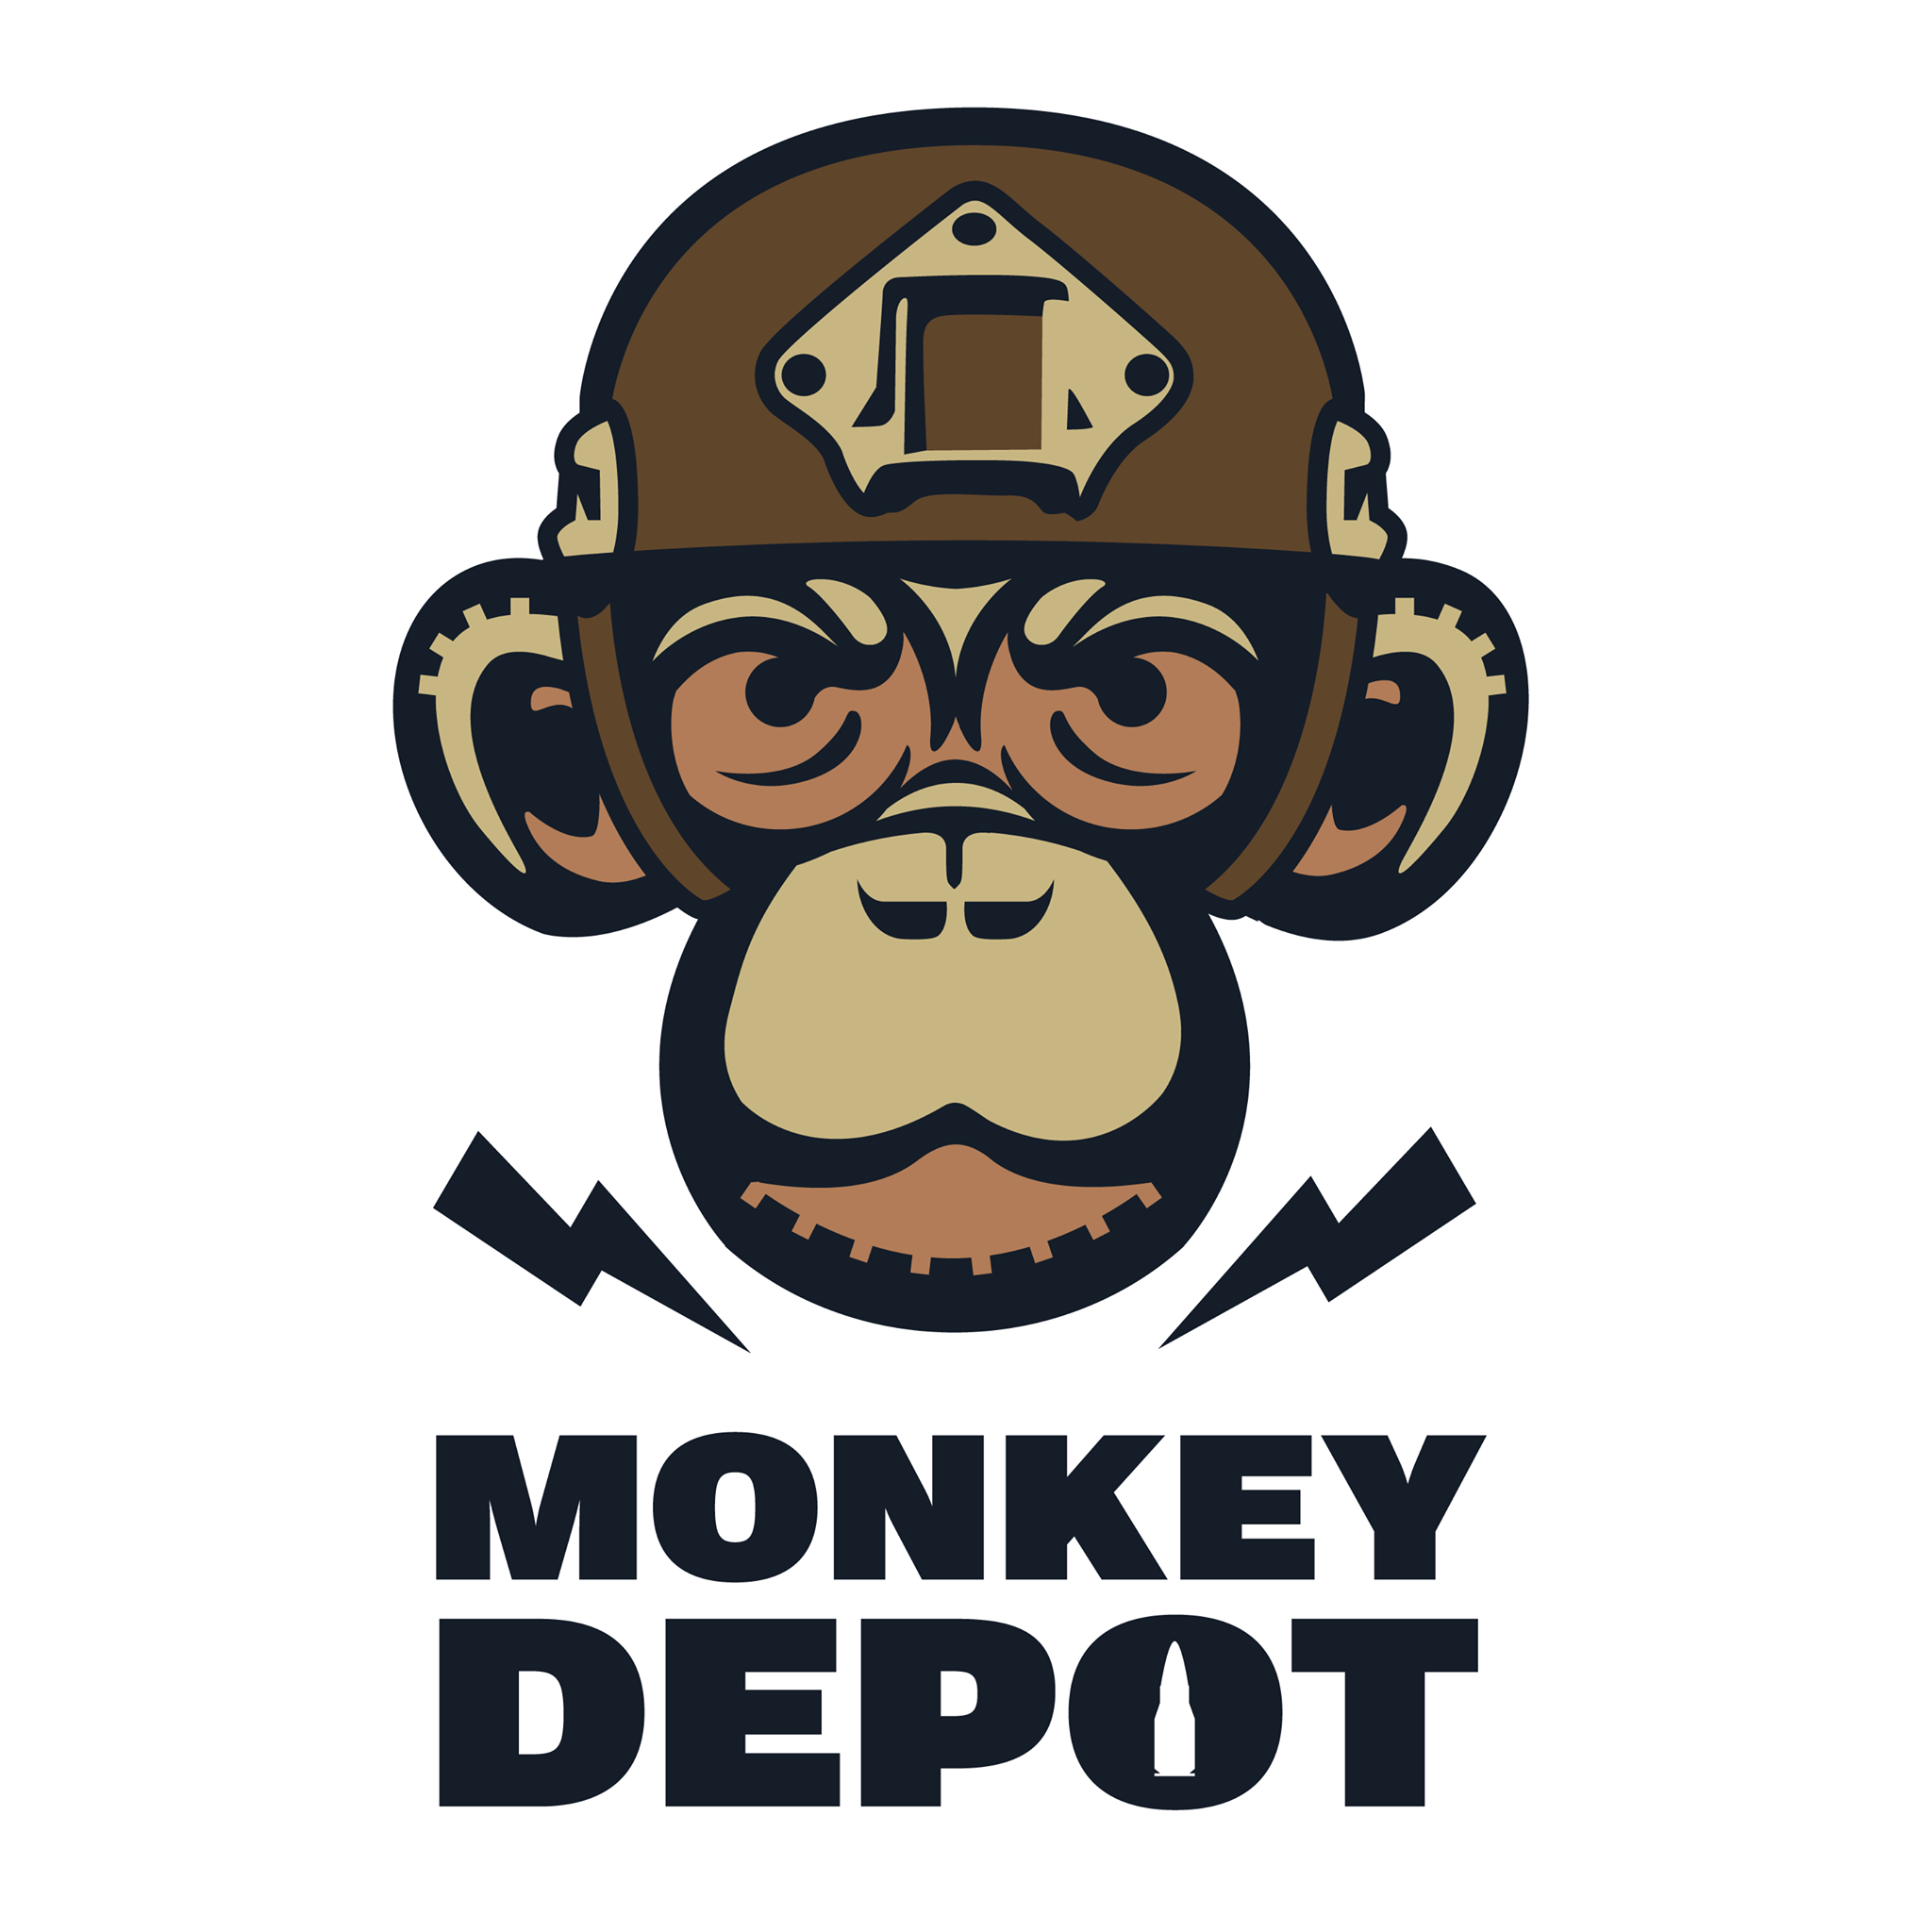 Monkey Depot